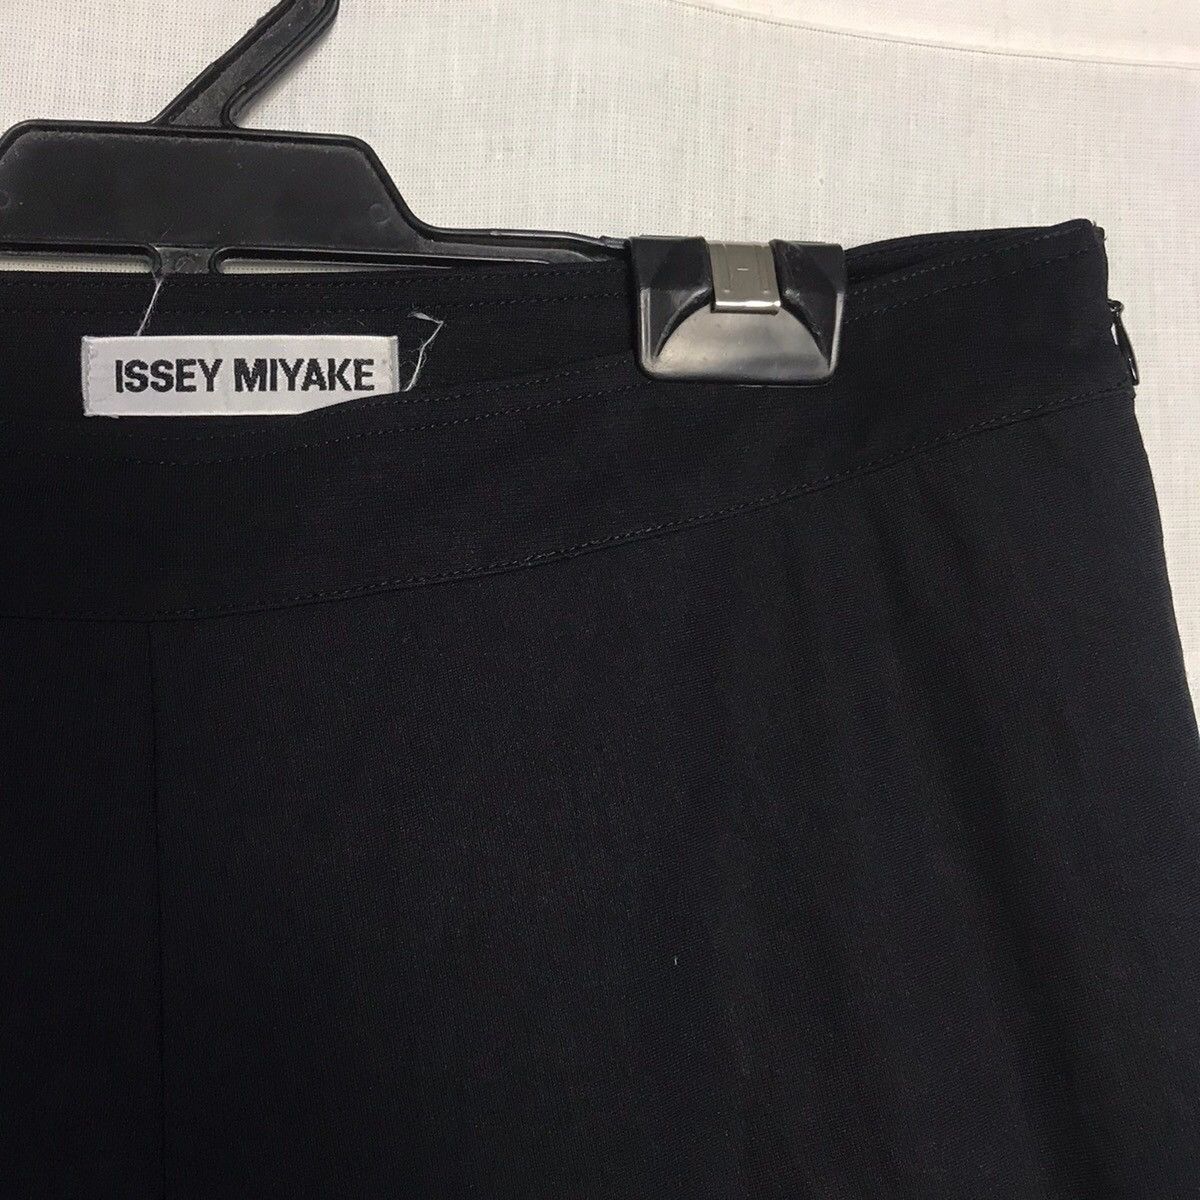 Issey miyake black stretches pants - 4